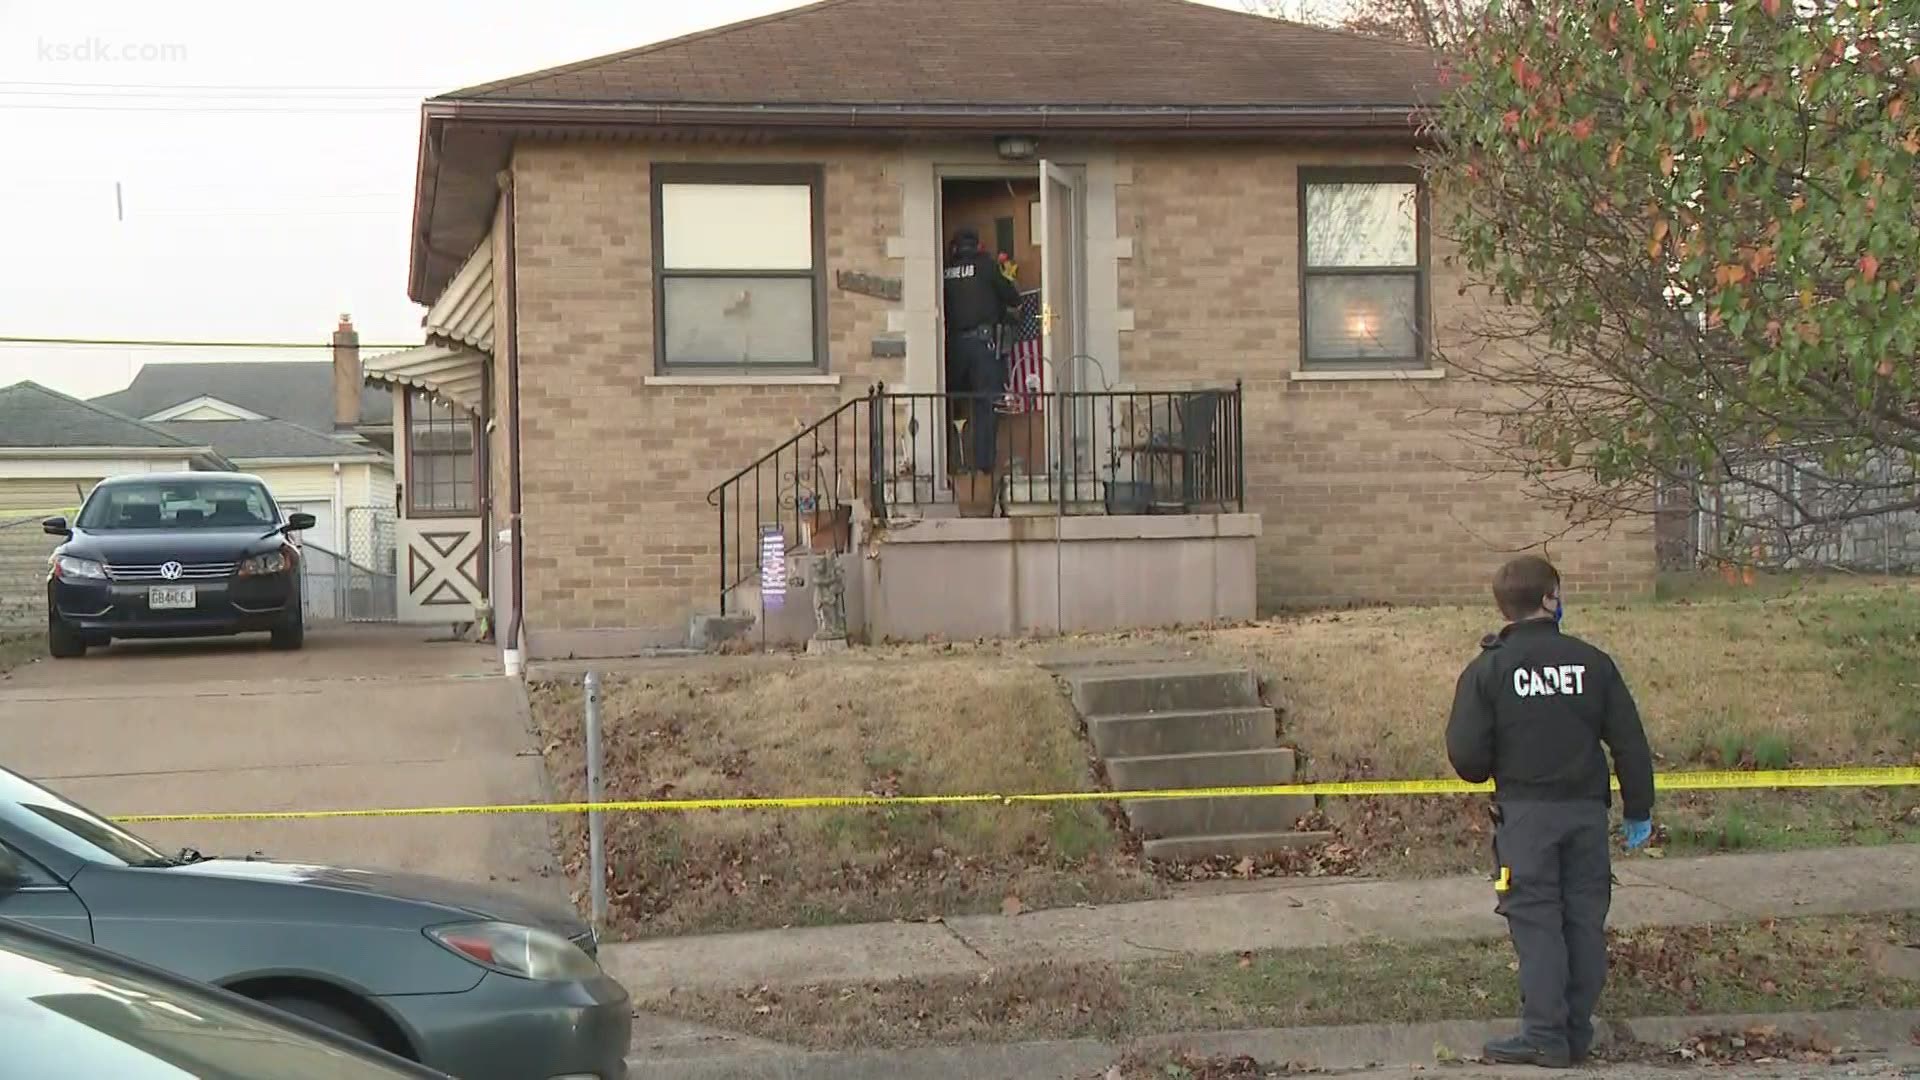 Child, adult found shot to death inside St. Louis home | www.cinemas93.org